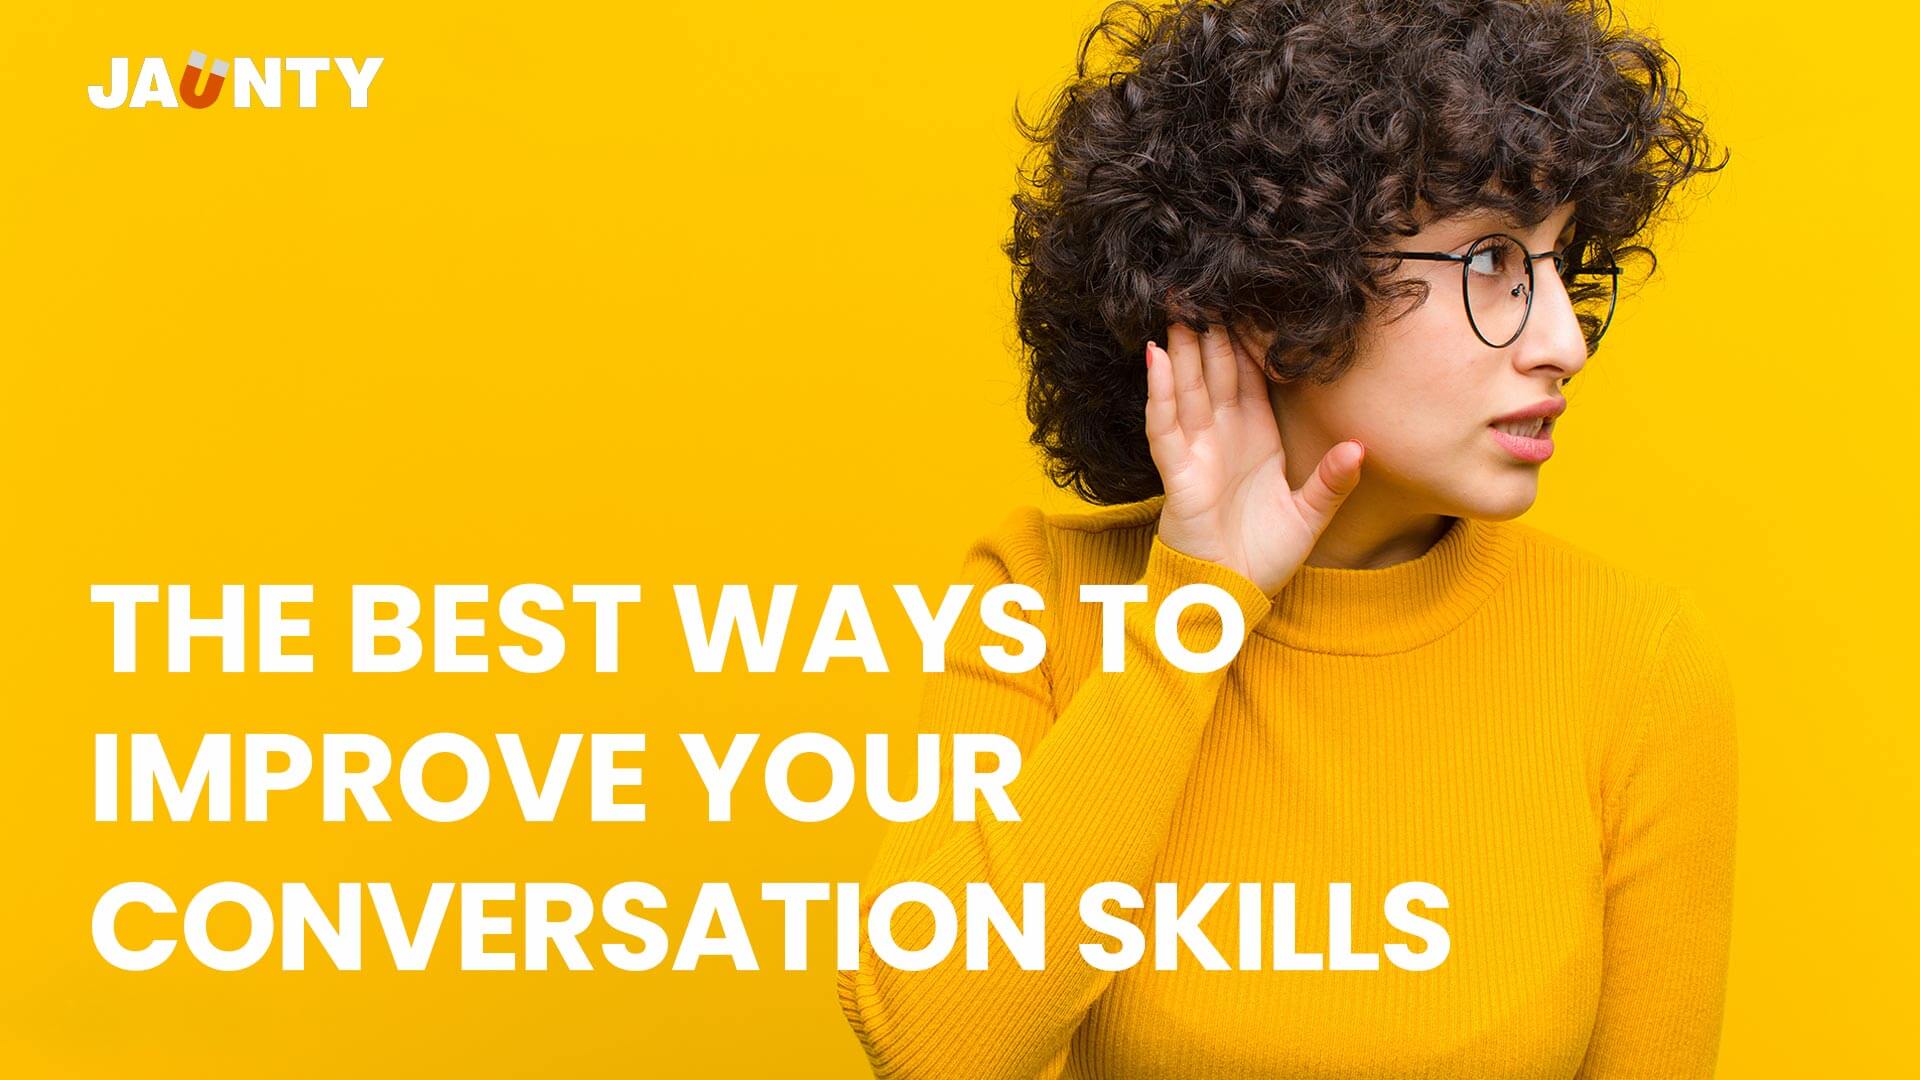 how to improve your conversation skills speech